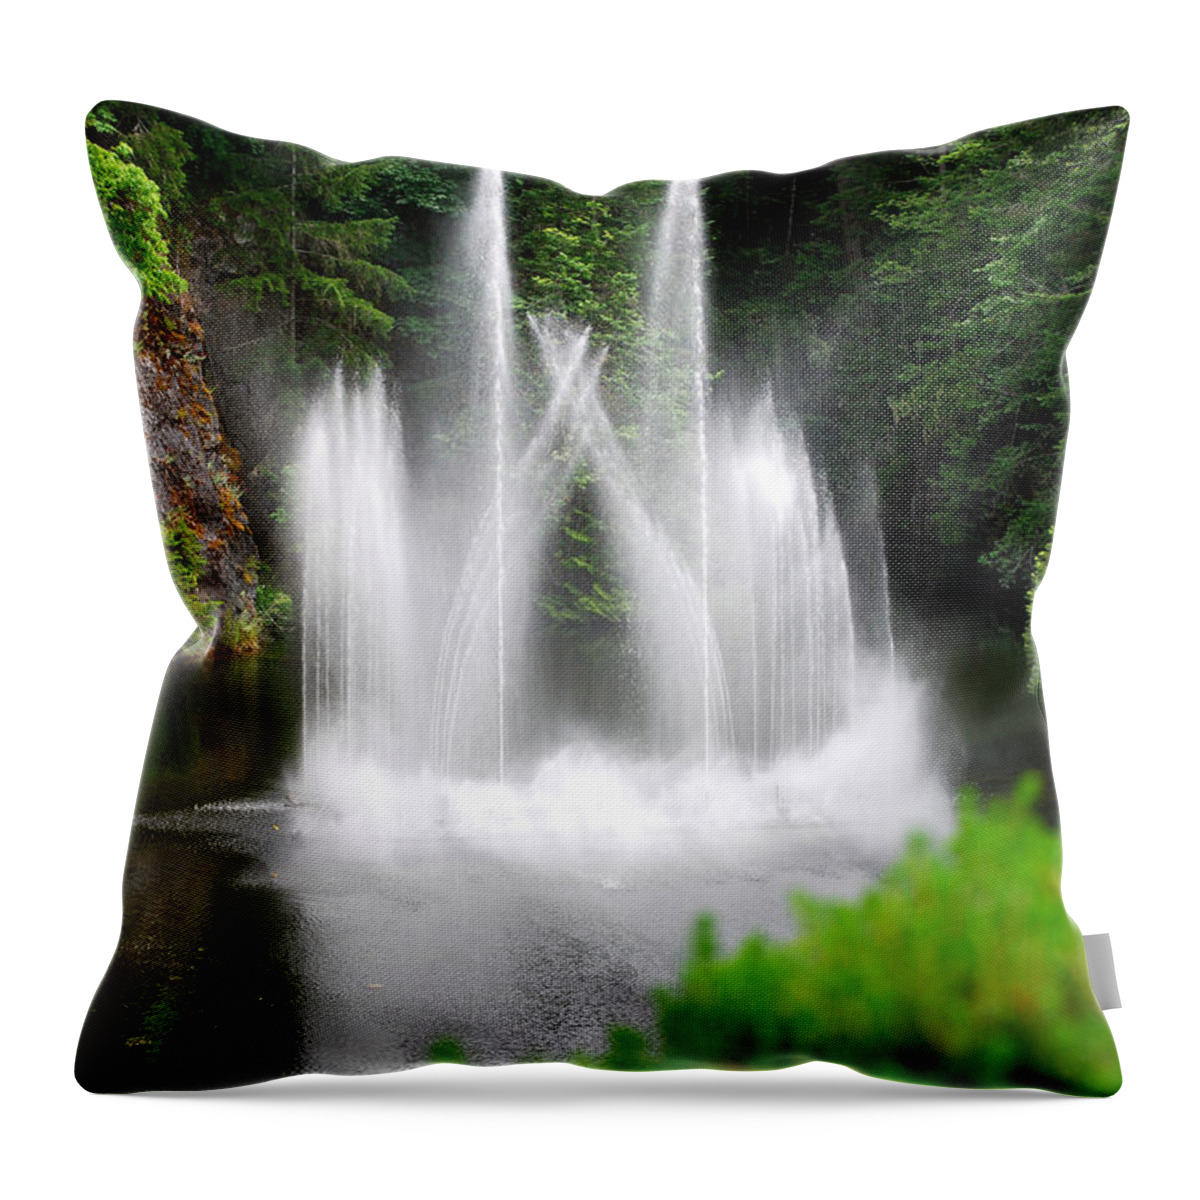 Butchart Gardens Waterfalls Throw Pillow featuring the photograph Butchart Gardens Waterfalls by Lisa Phillips